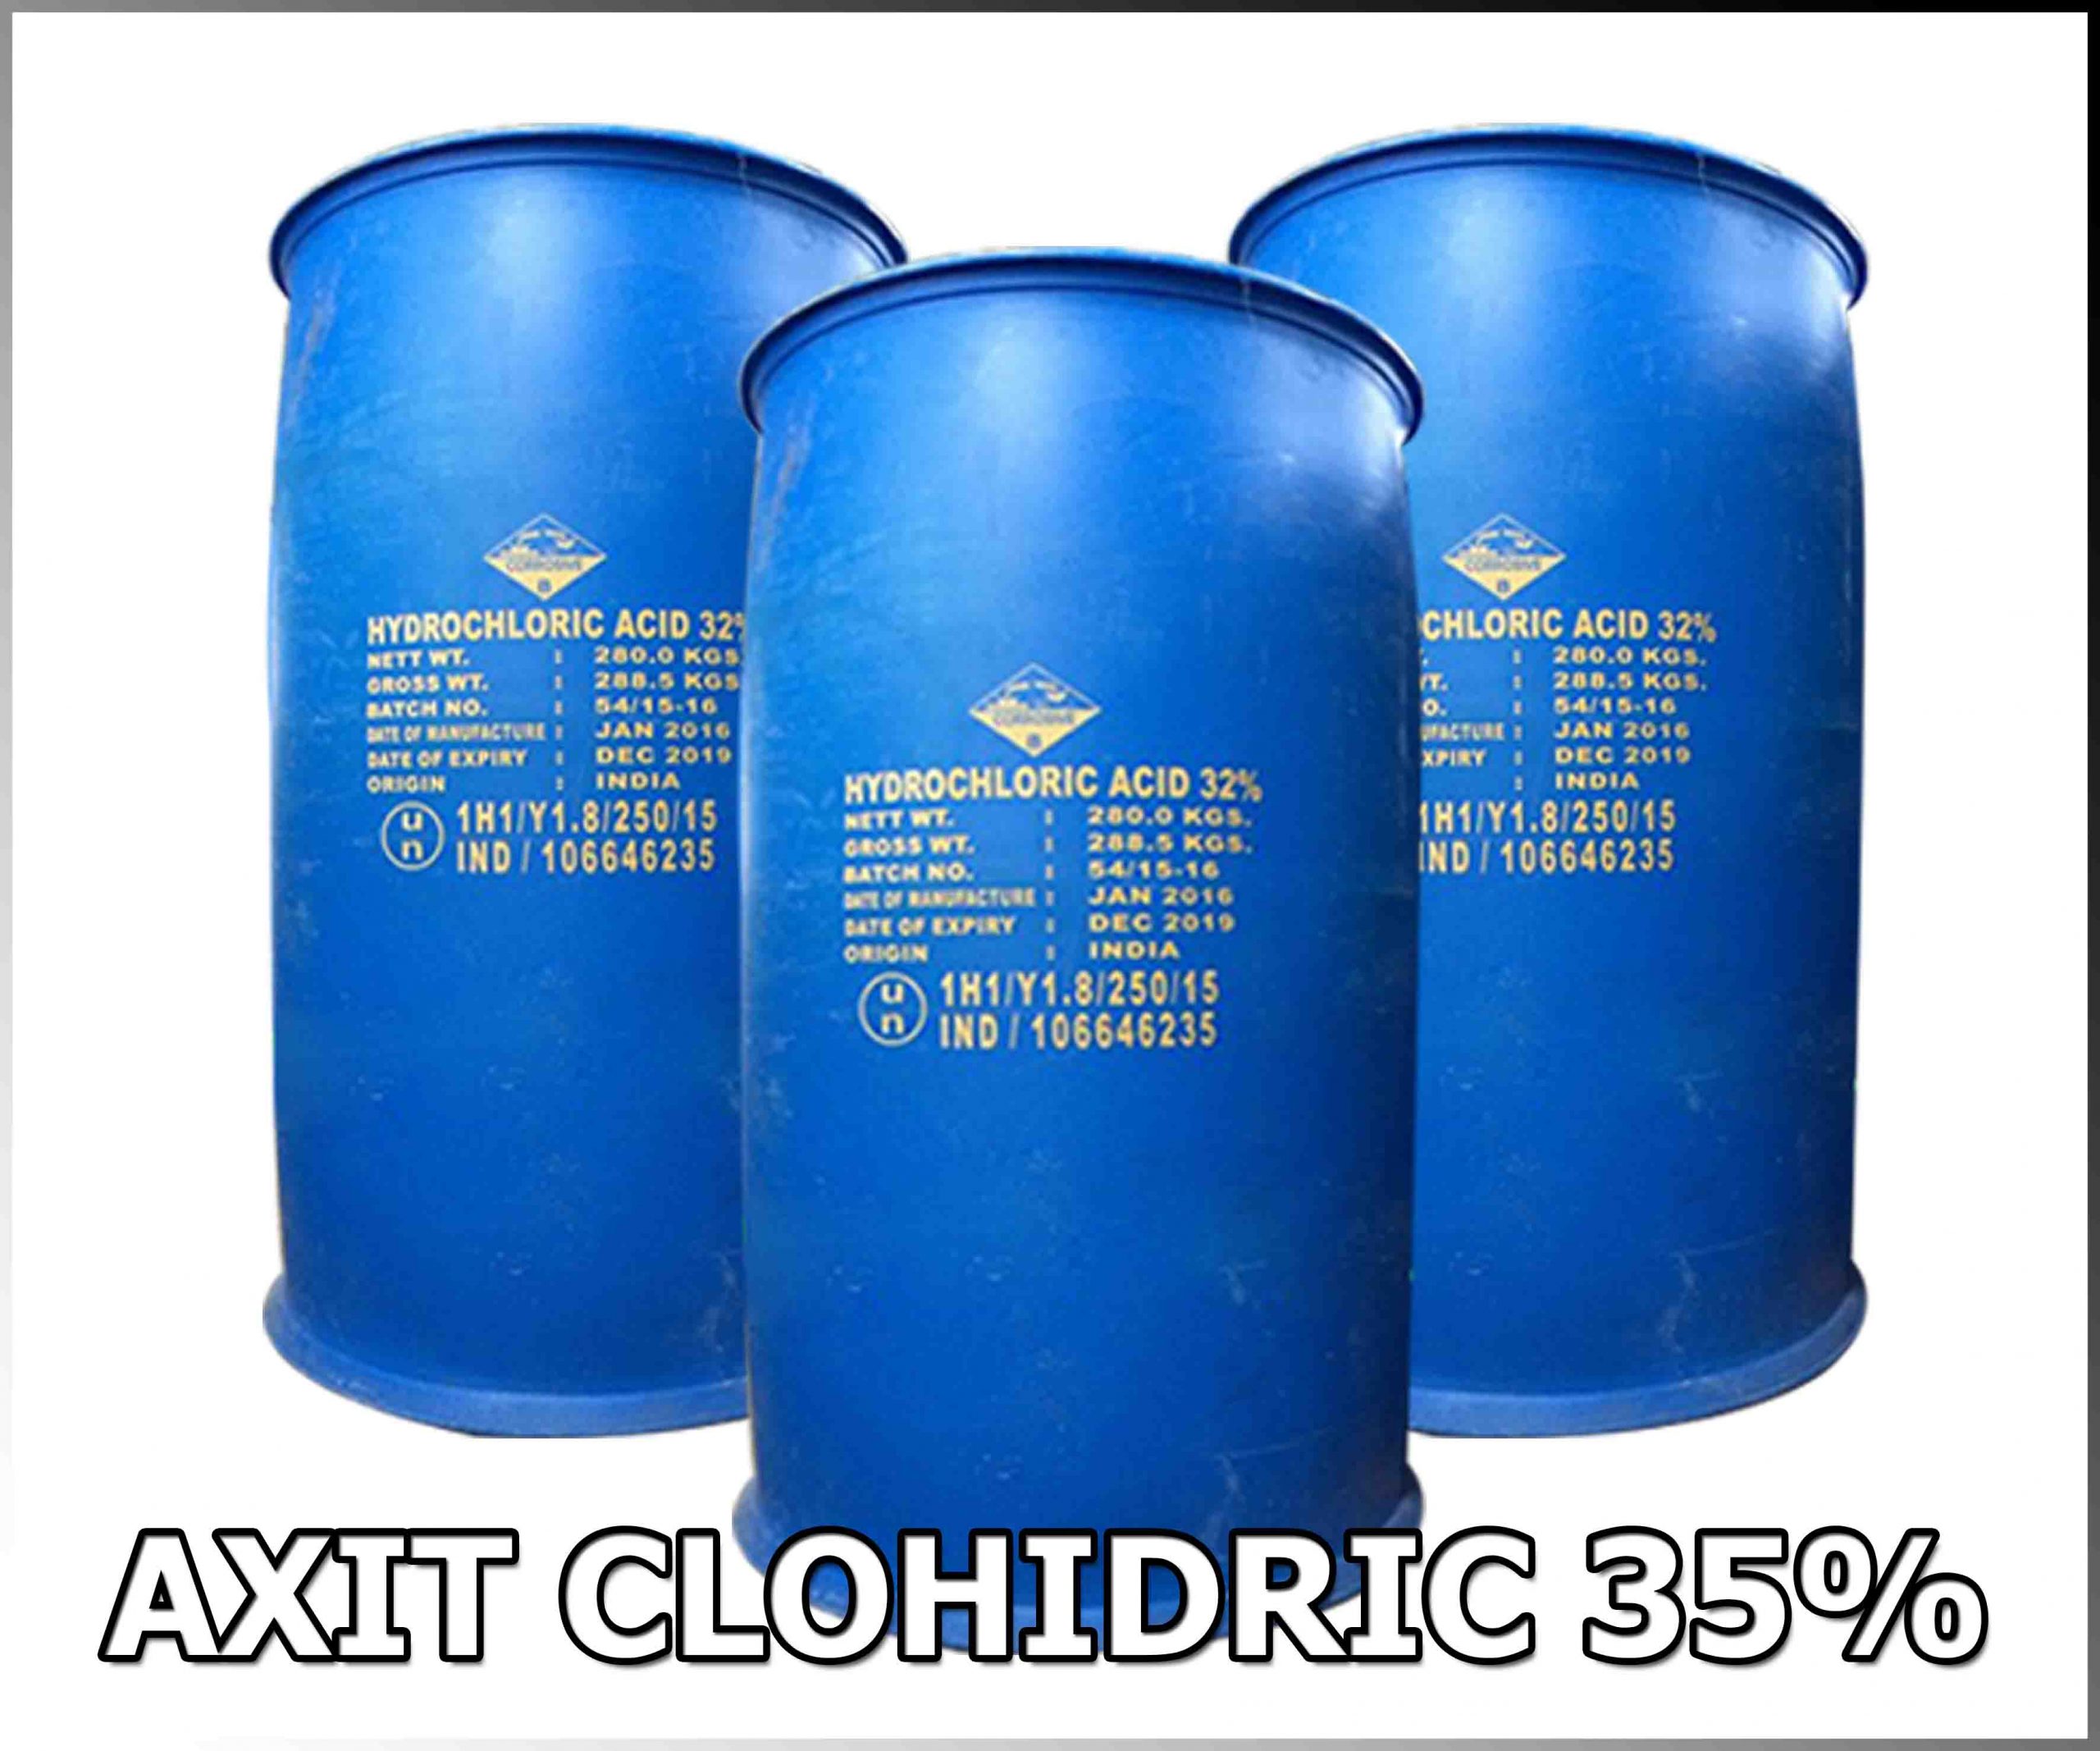 AXIT CLOHIDRIC 35%